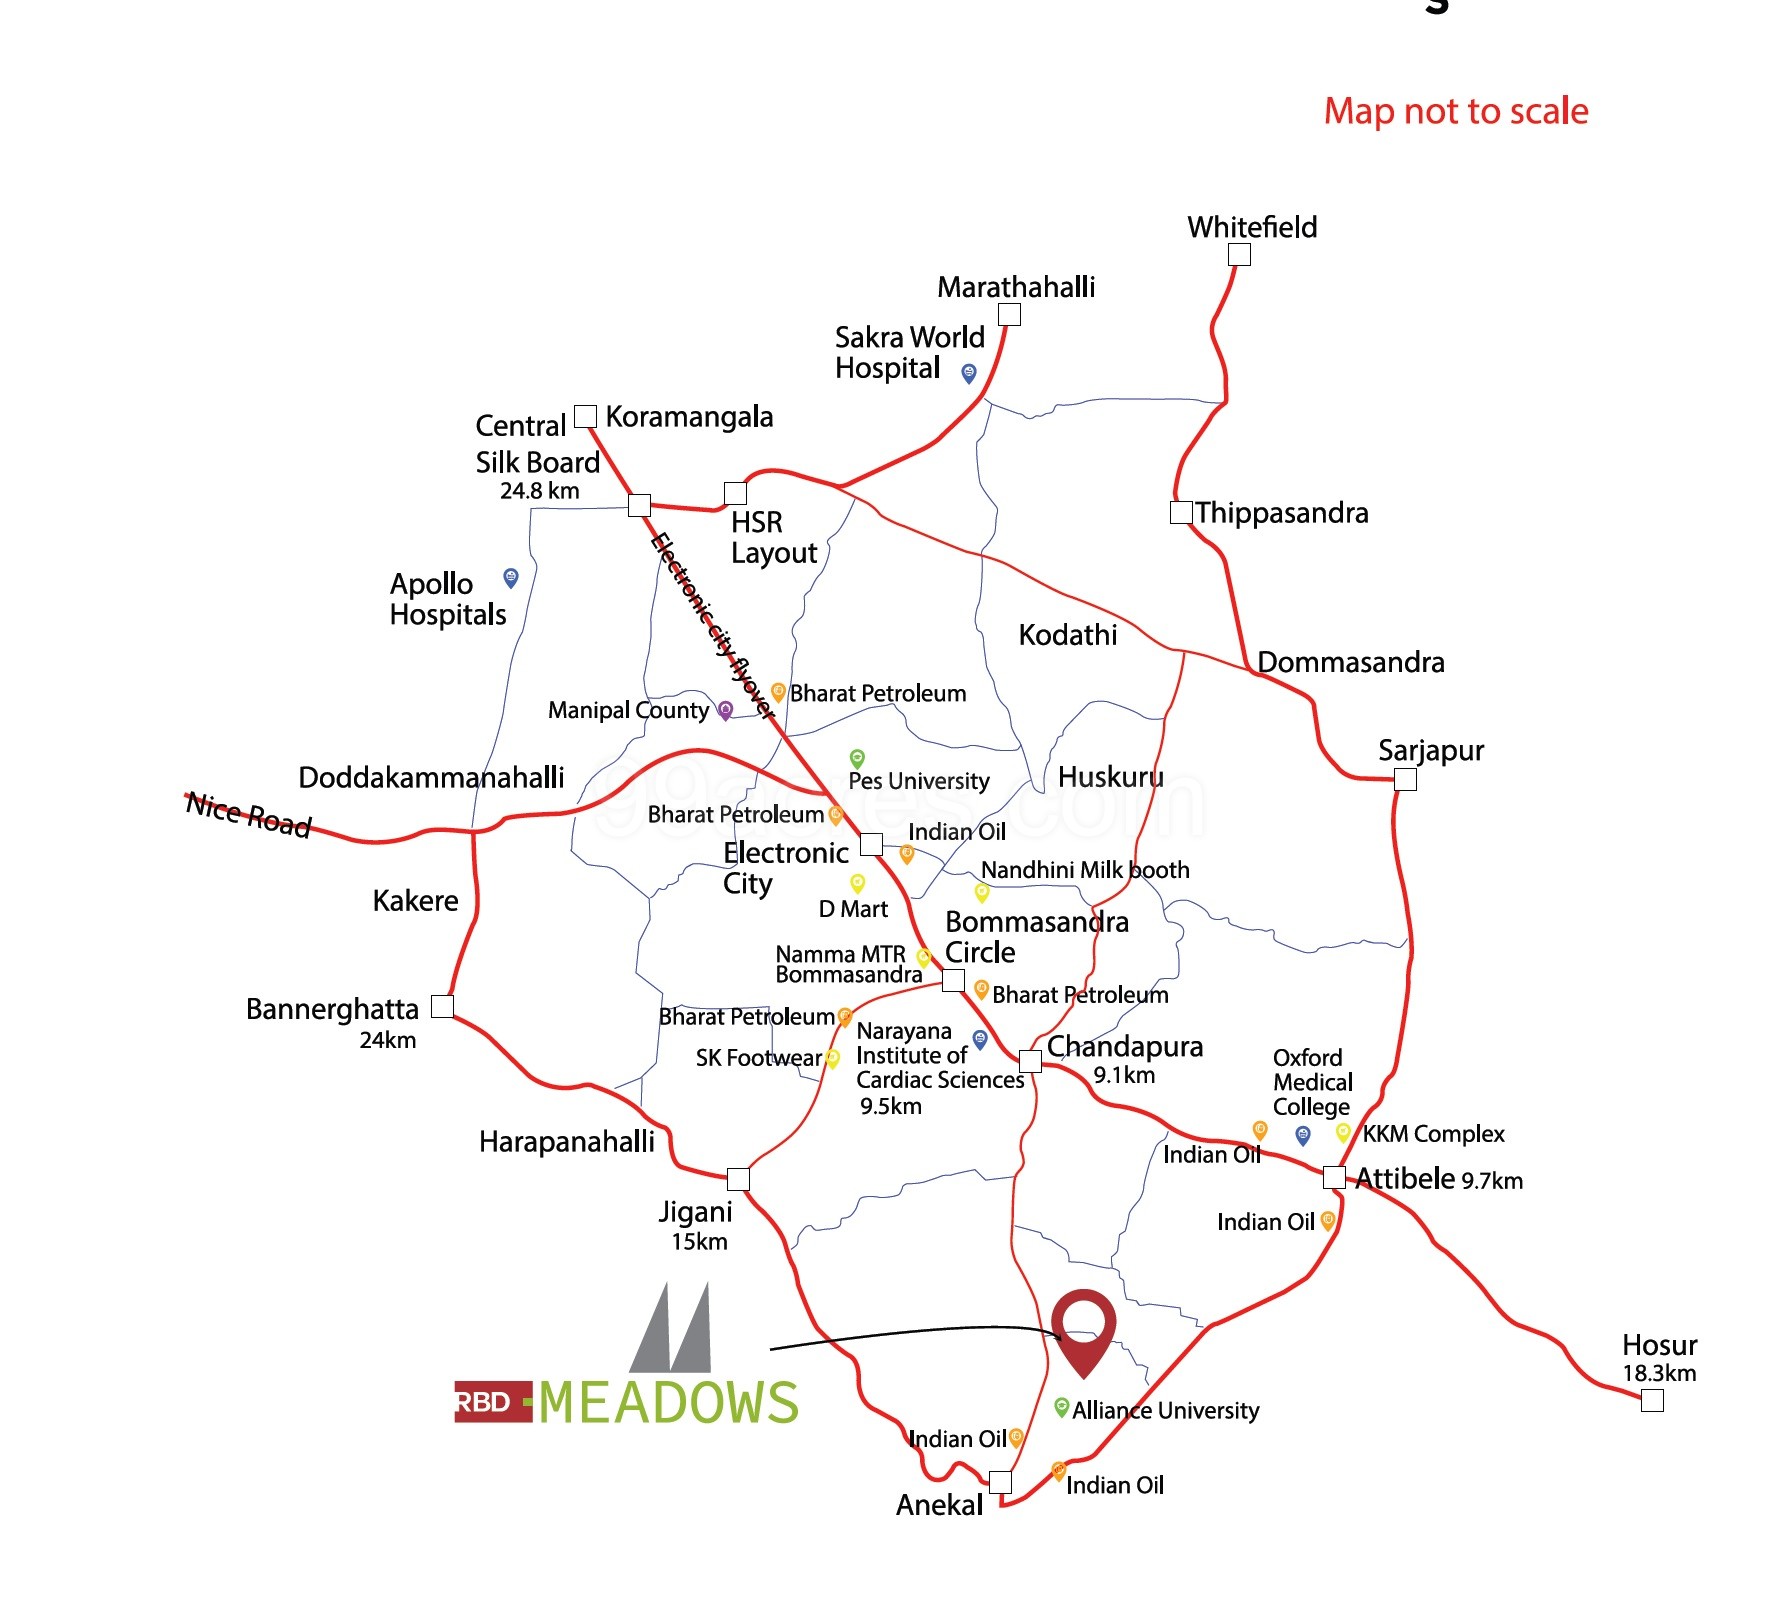 Rbd Meadows Location Map